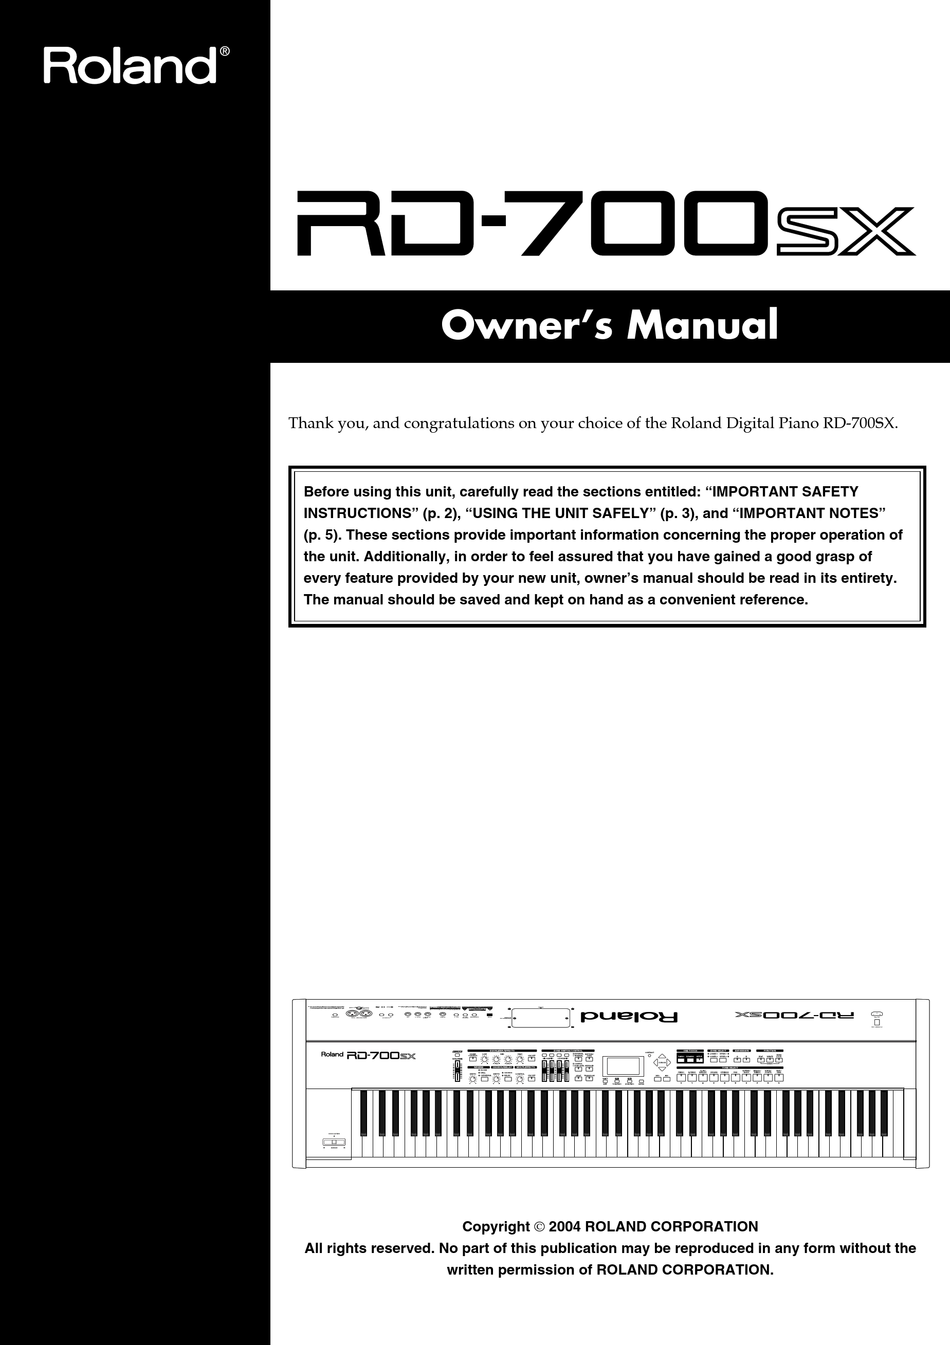 ROLAND RD-700SX OWNER'S MANUAL Pdf Download | ManualsLib